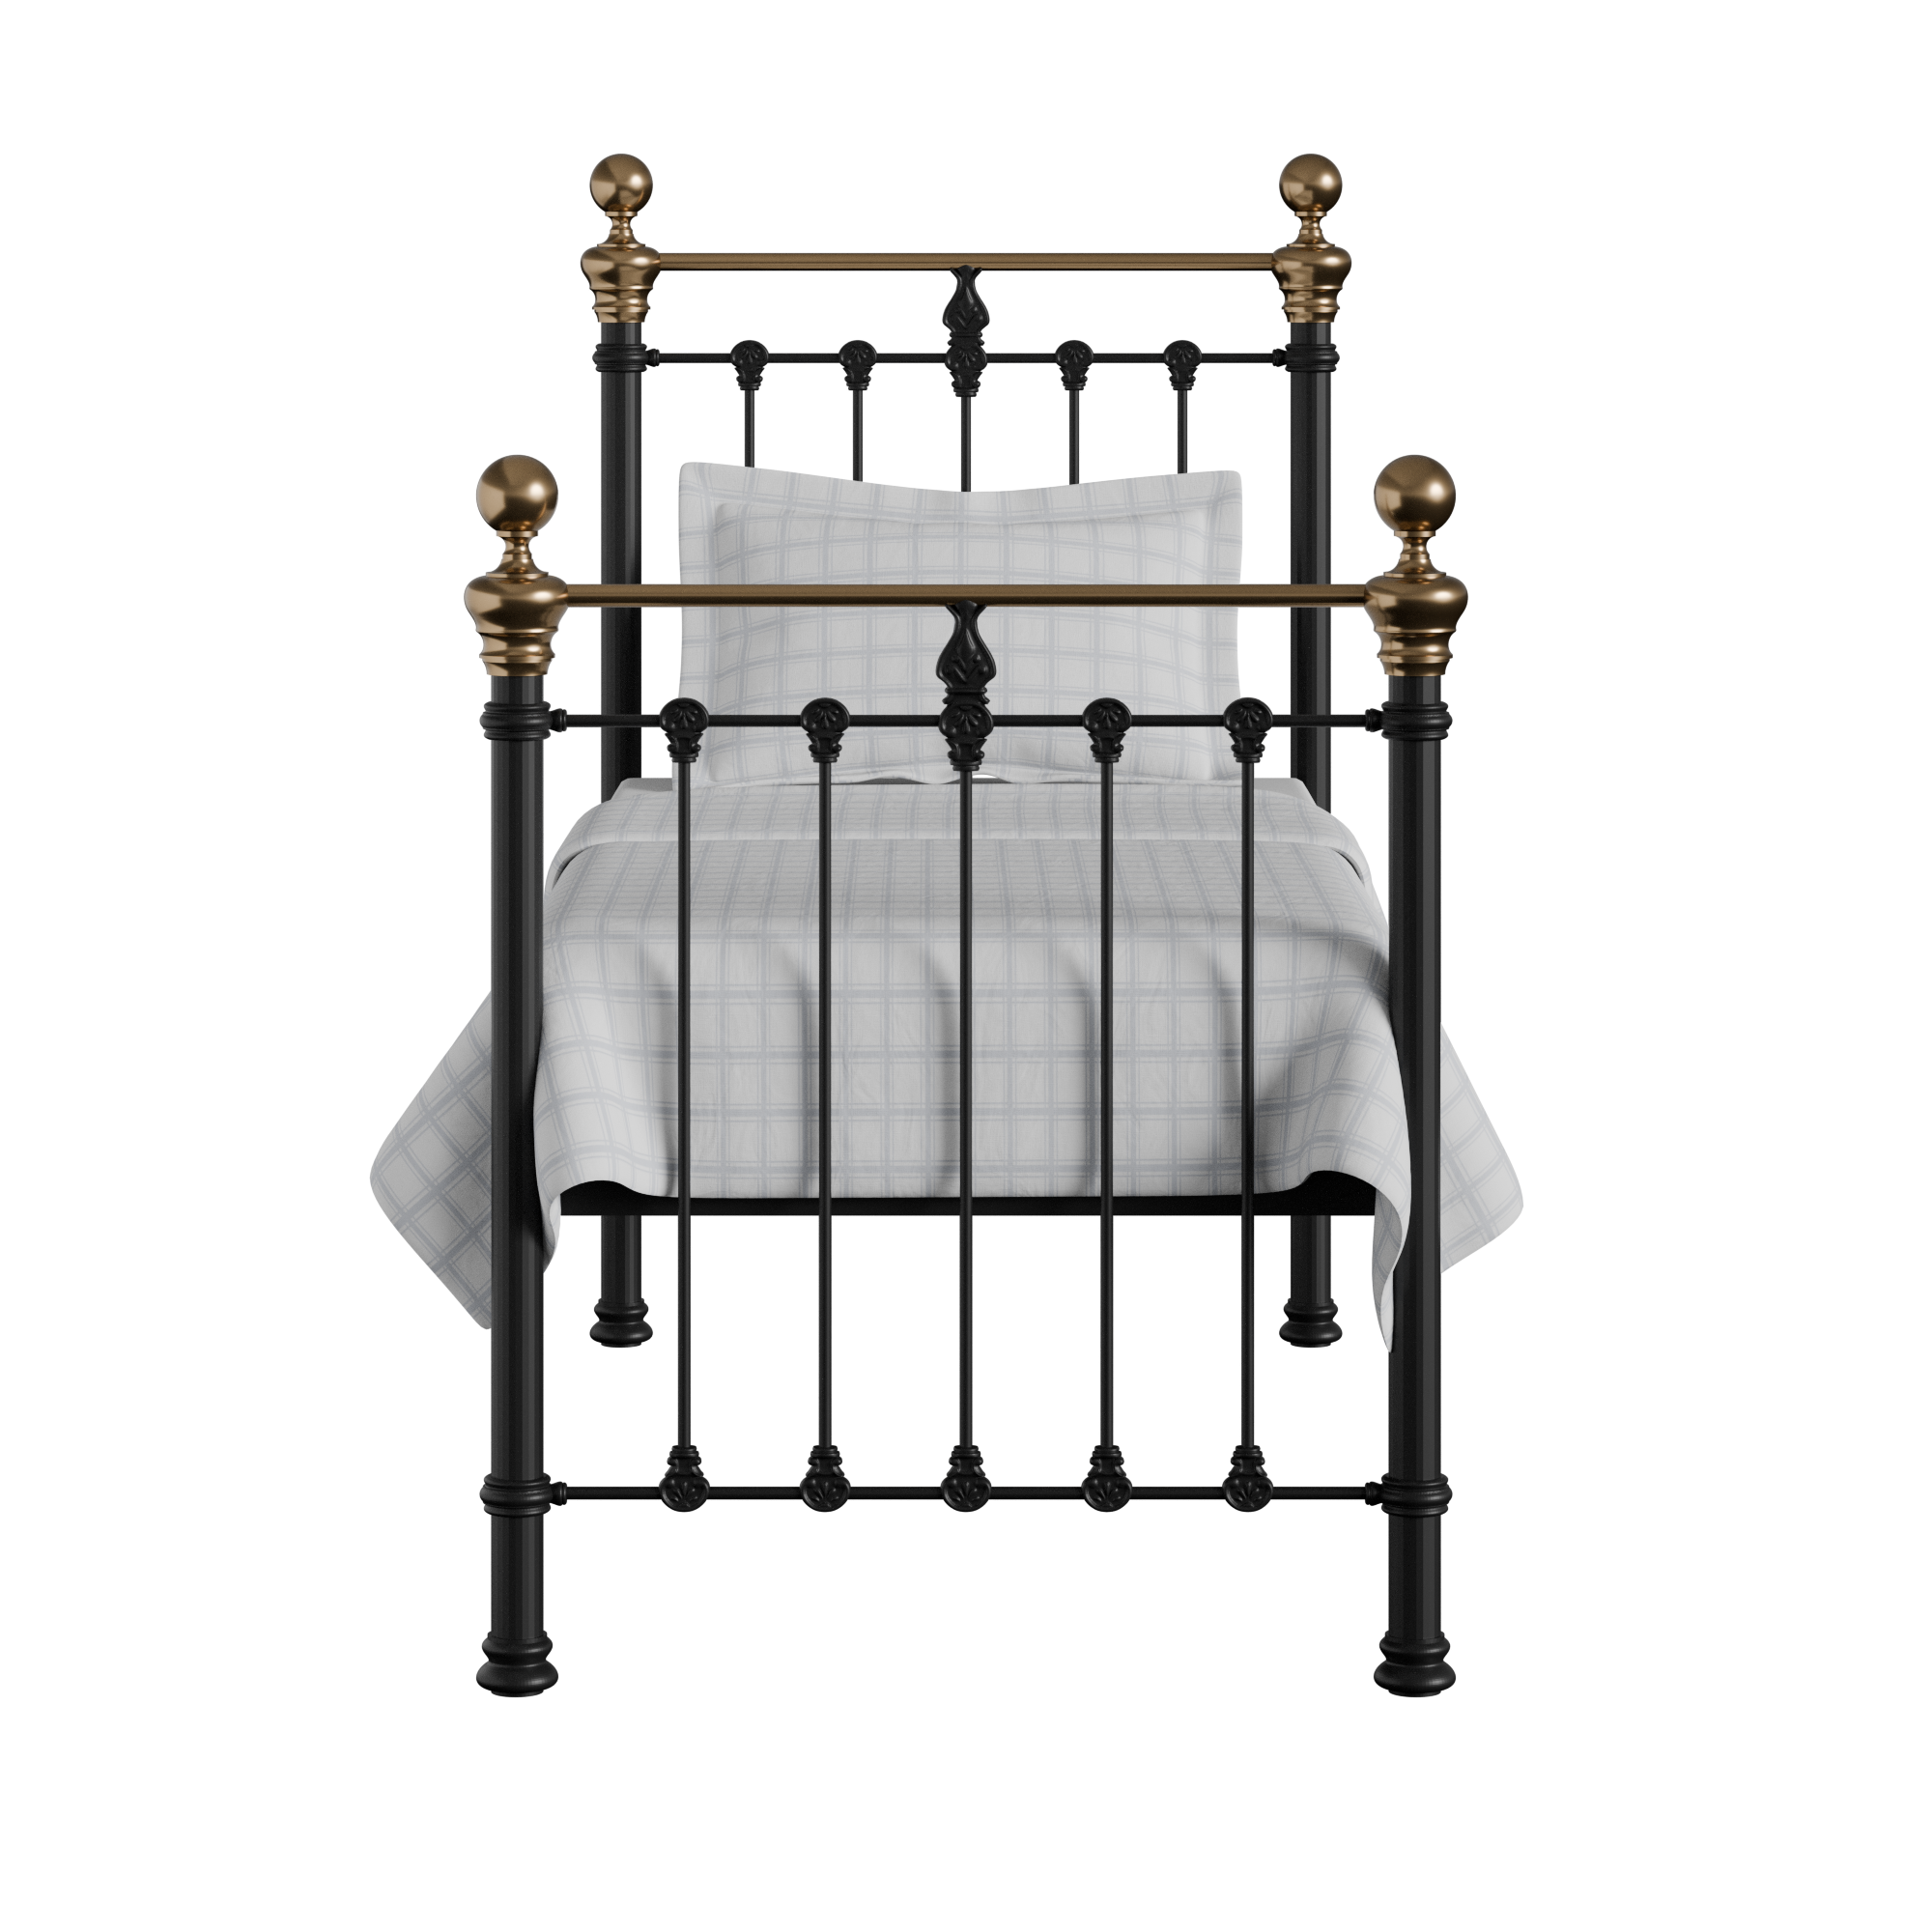 Hamilton iron/metal single bed in black